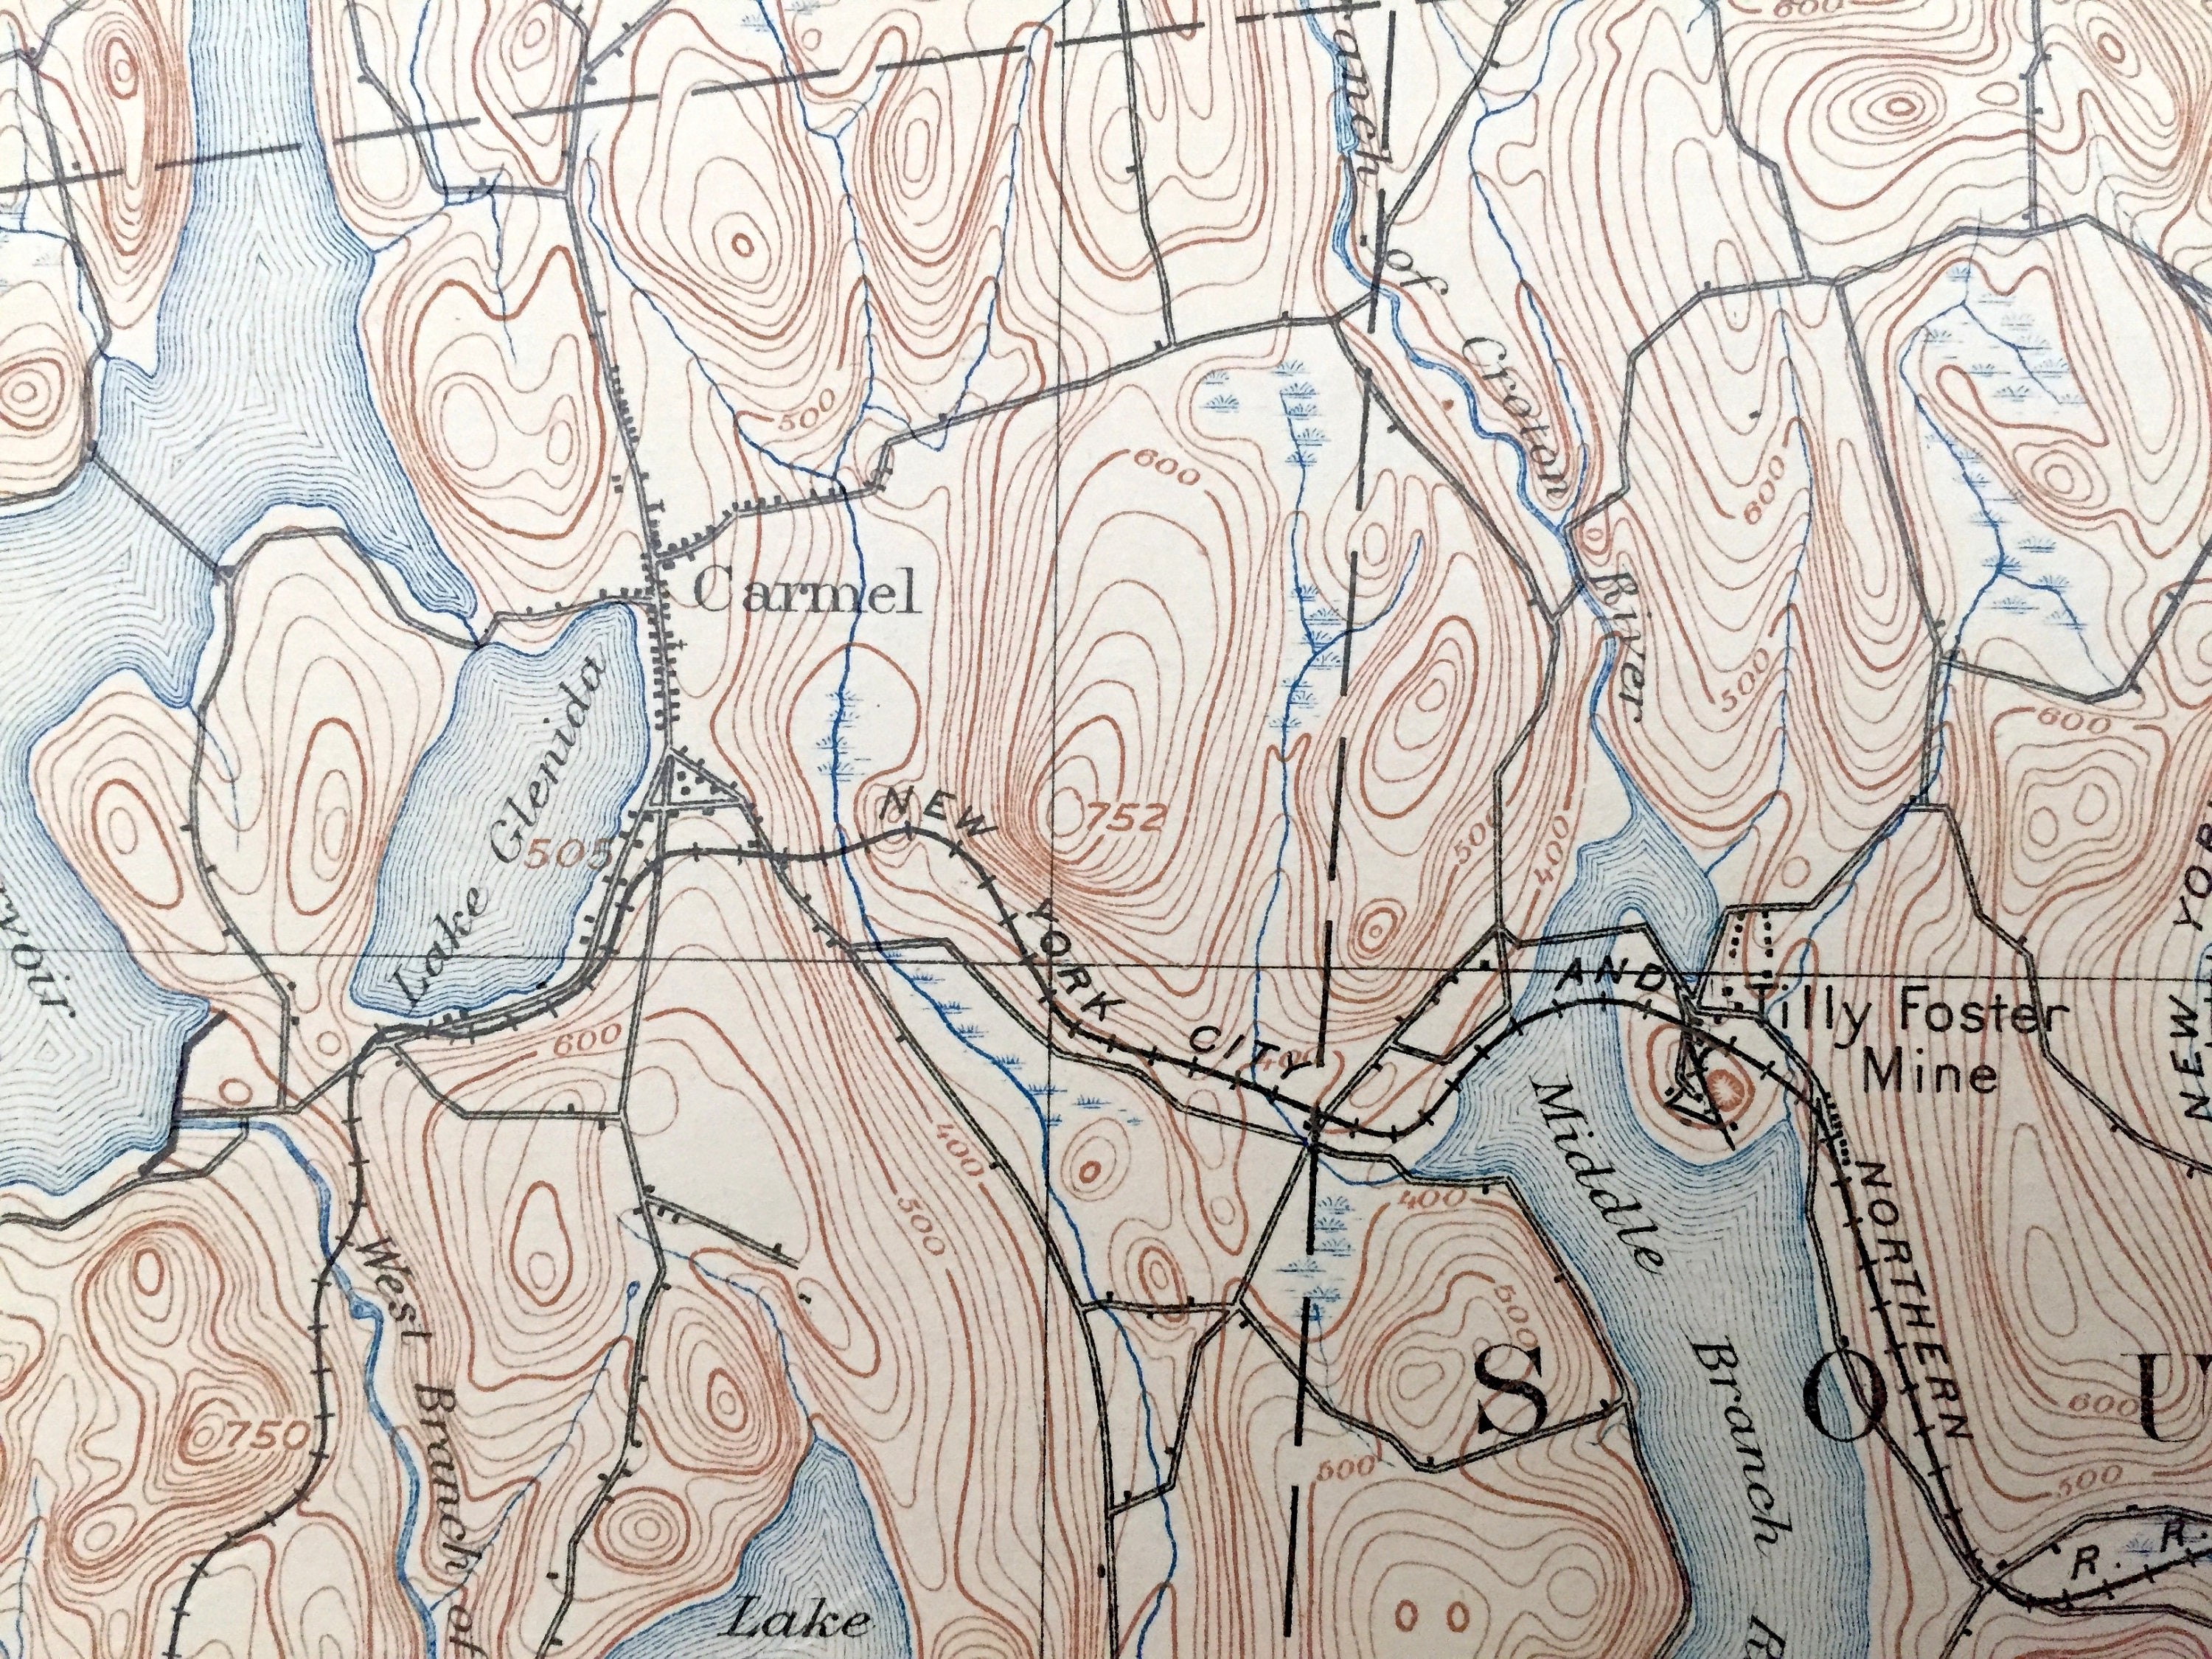 USGS 1894-23 x 31.13 Carmel New York Sheet 